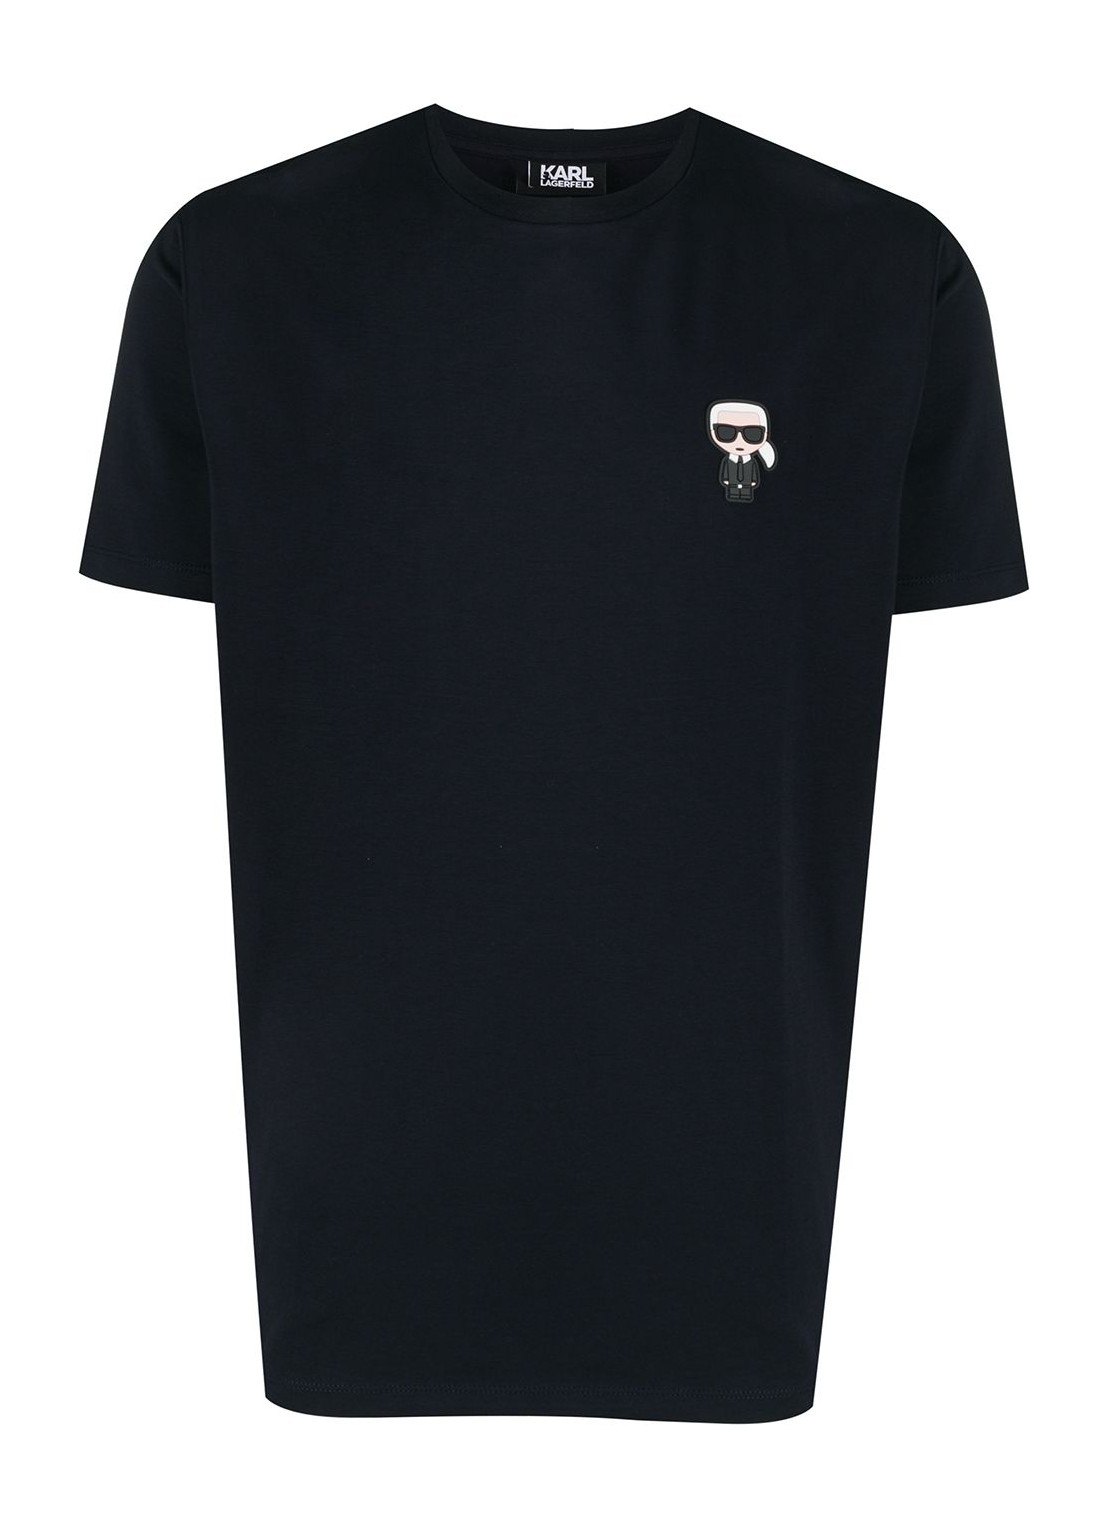 Camiseta karl lagerfeld t-shirt man t-shirt crewneck nos 755027500221 690 talla XXL
 